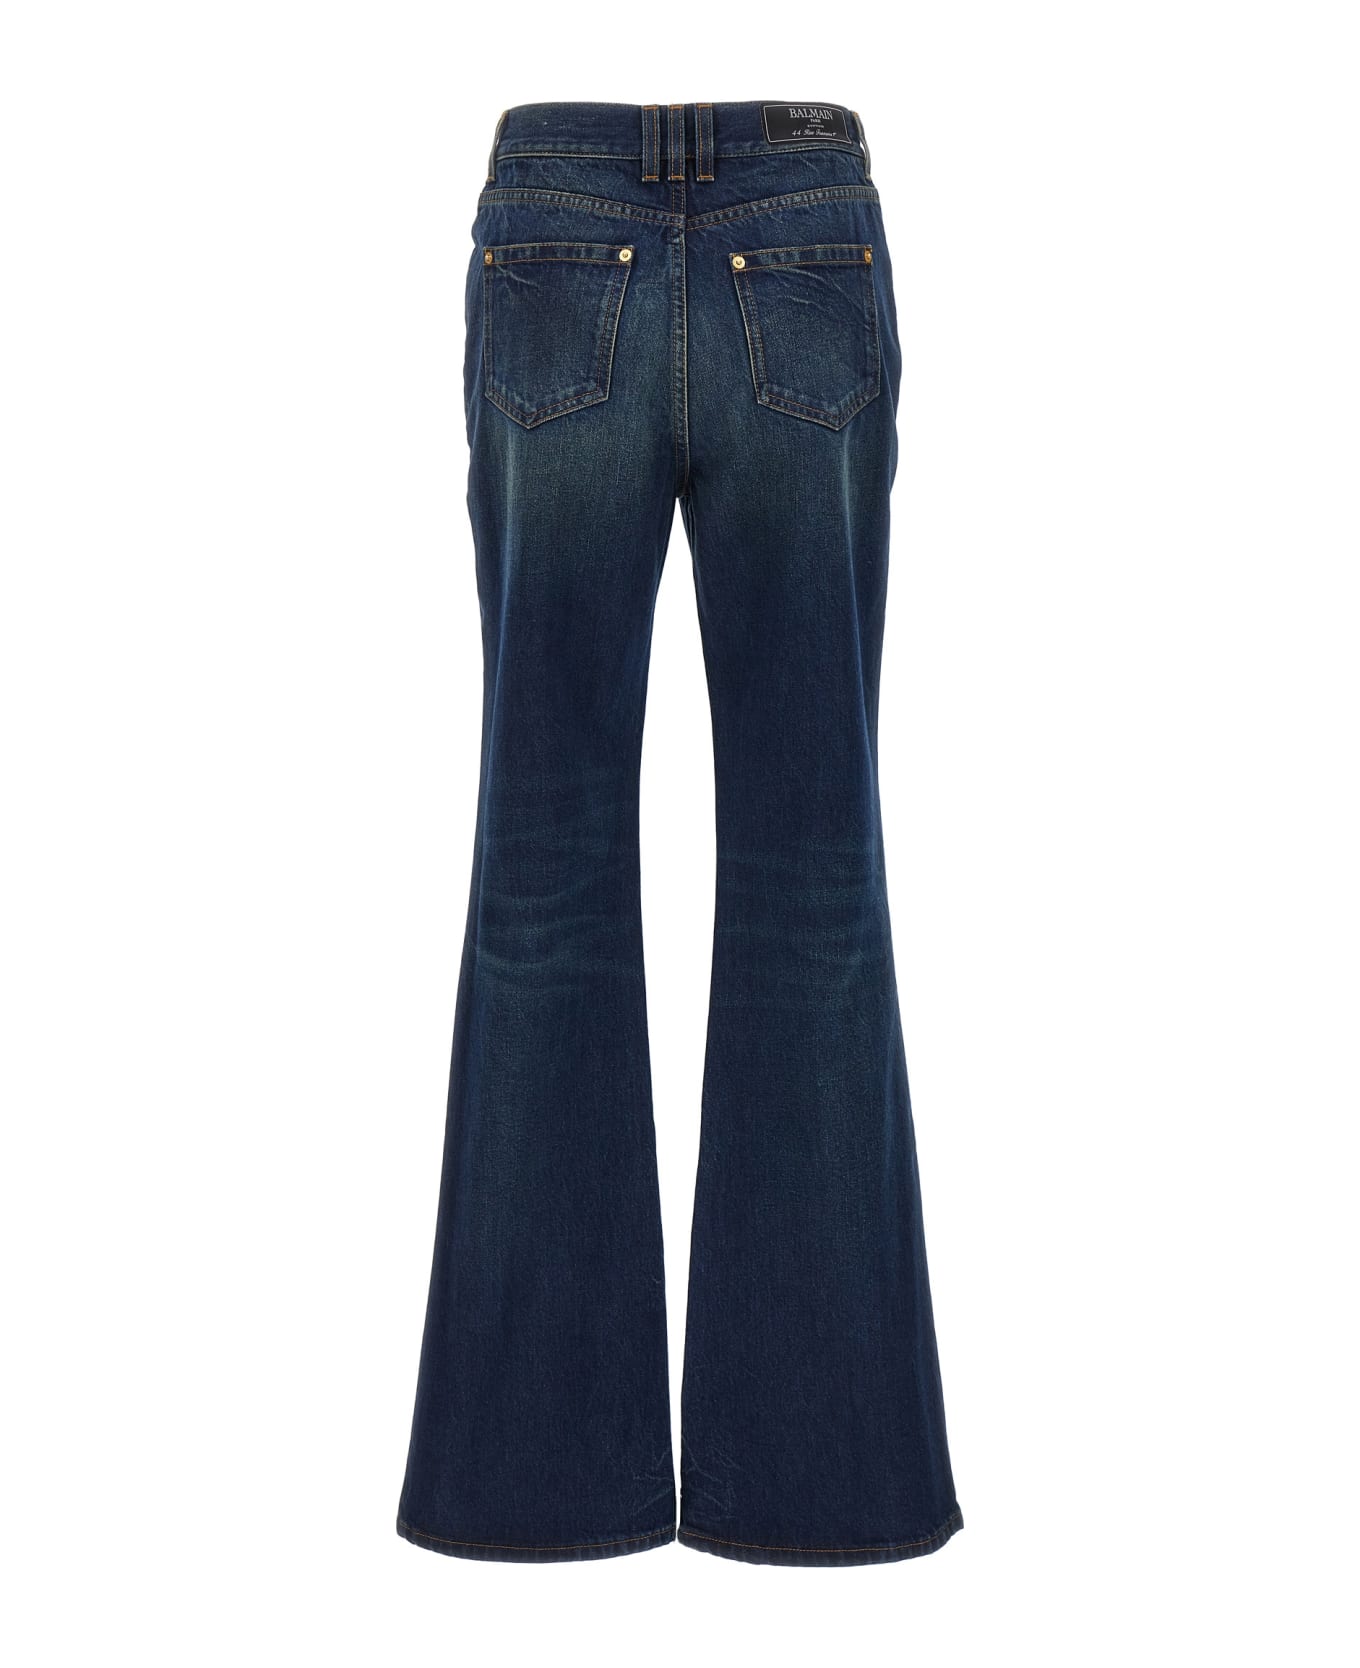 Balmain Bootcut Jeans - blue デニム